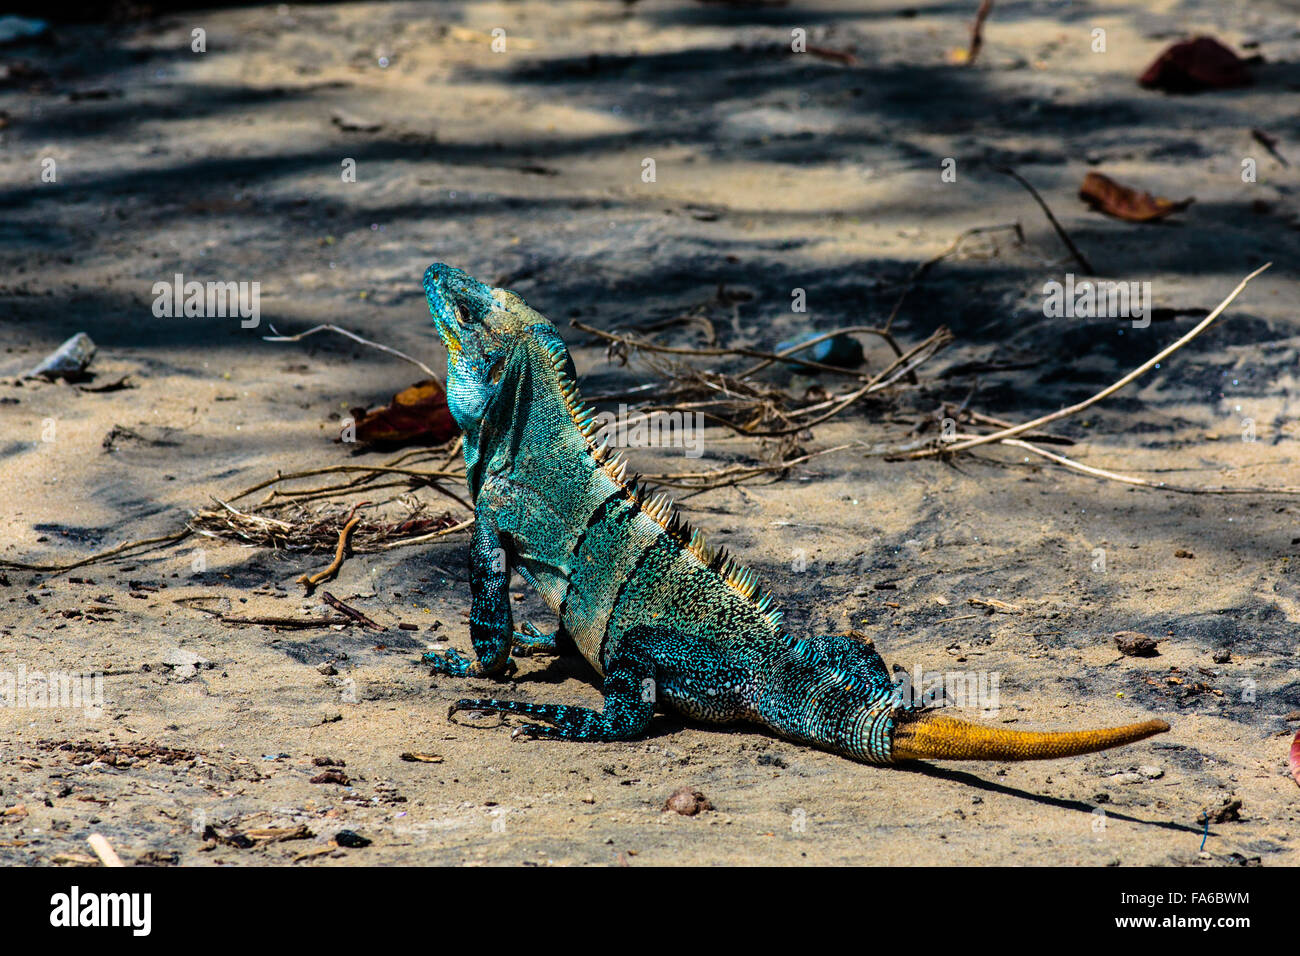 Iguana on the beach, Playa Hermosa, Costa Rica Stock Photo